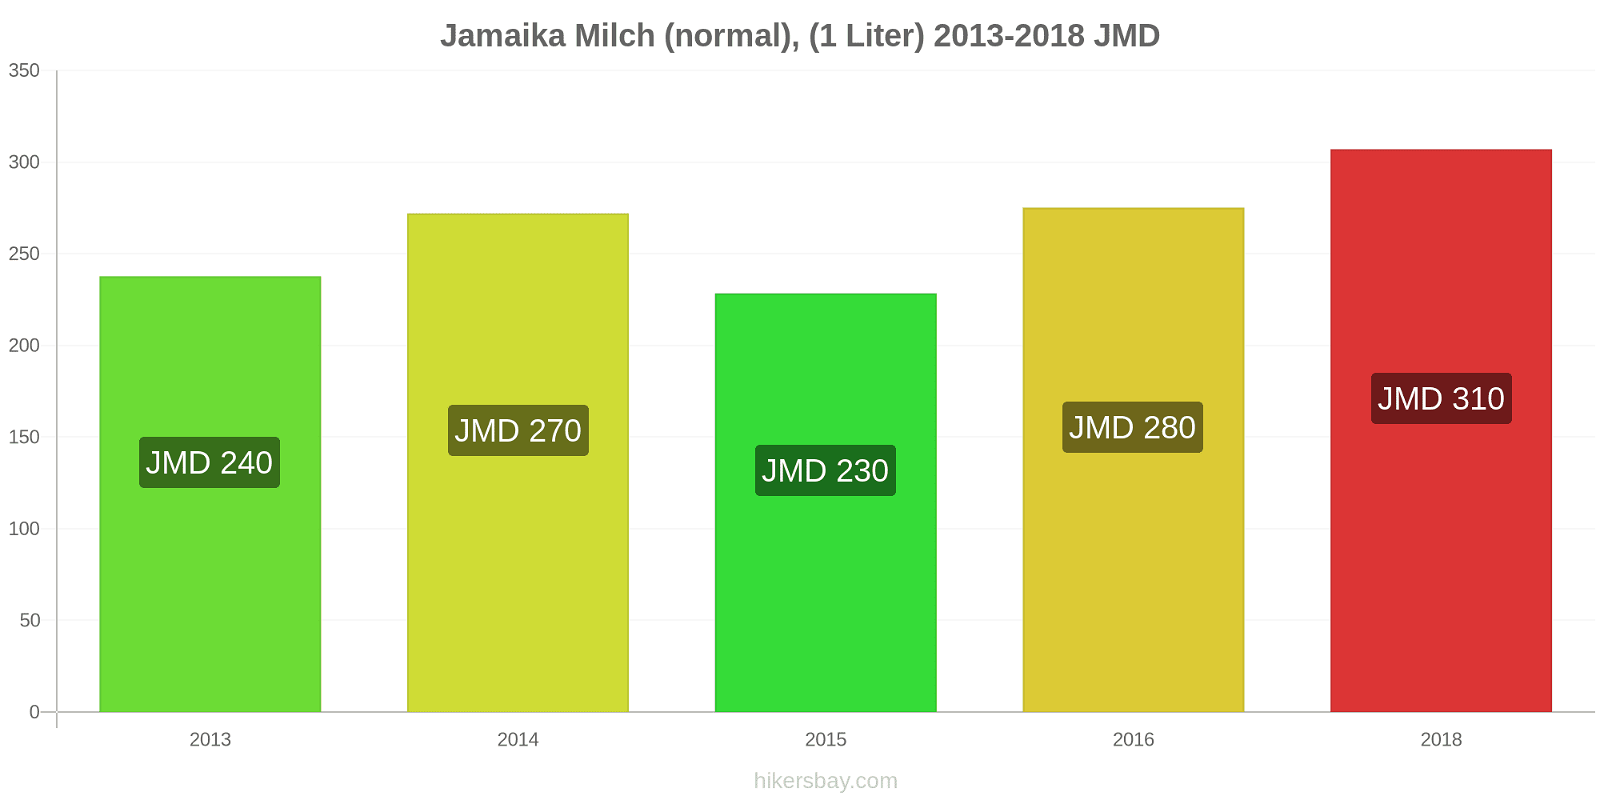 Jamaika Preisänderungen (Regulär), Milch (1 Liter) hikersbay.com